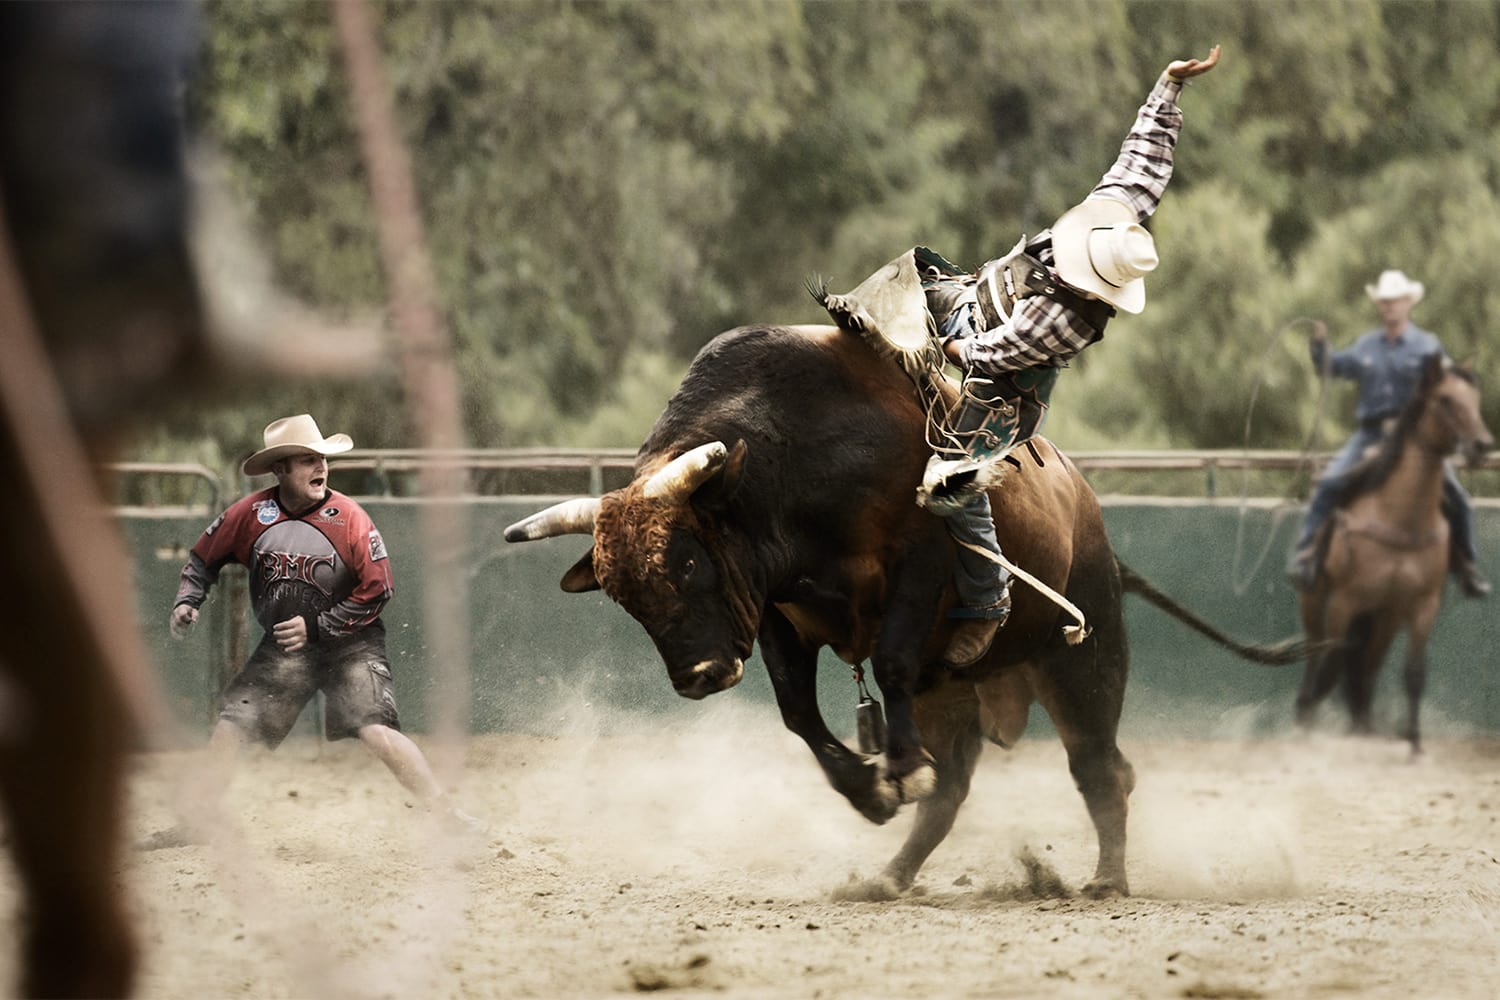 Rodeo-Bull-rider-PBR-wrangler-cowboy-Rod-McLean